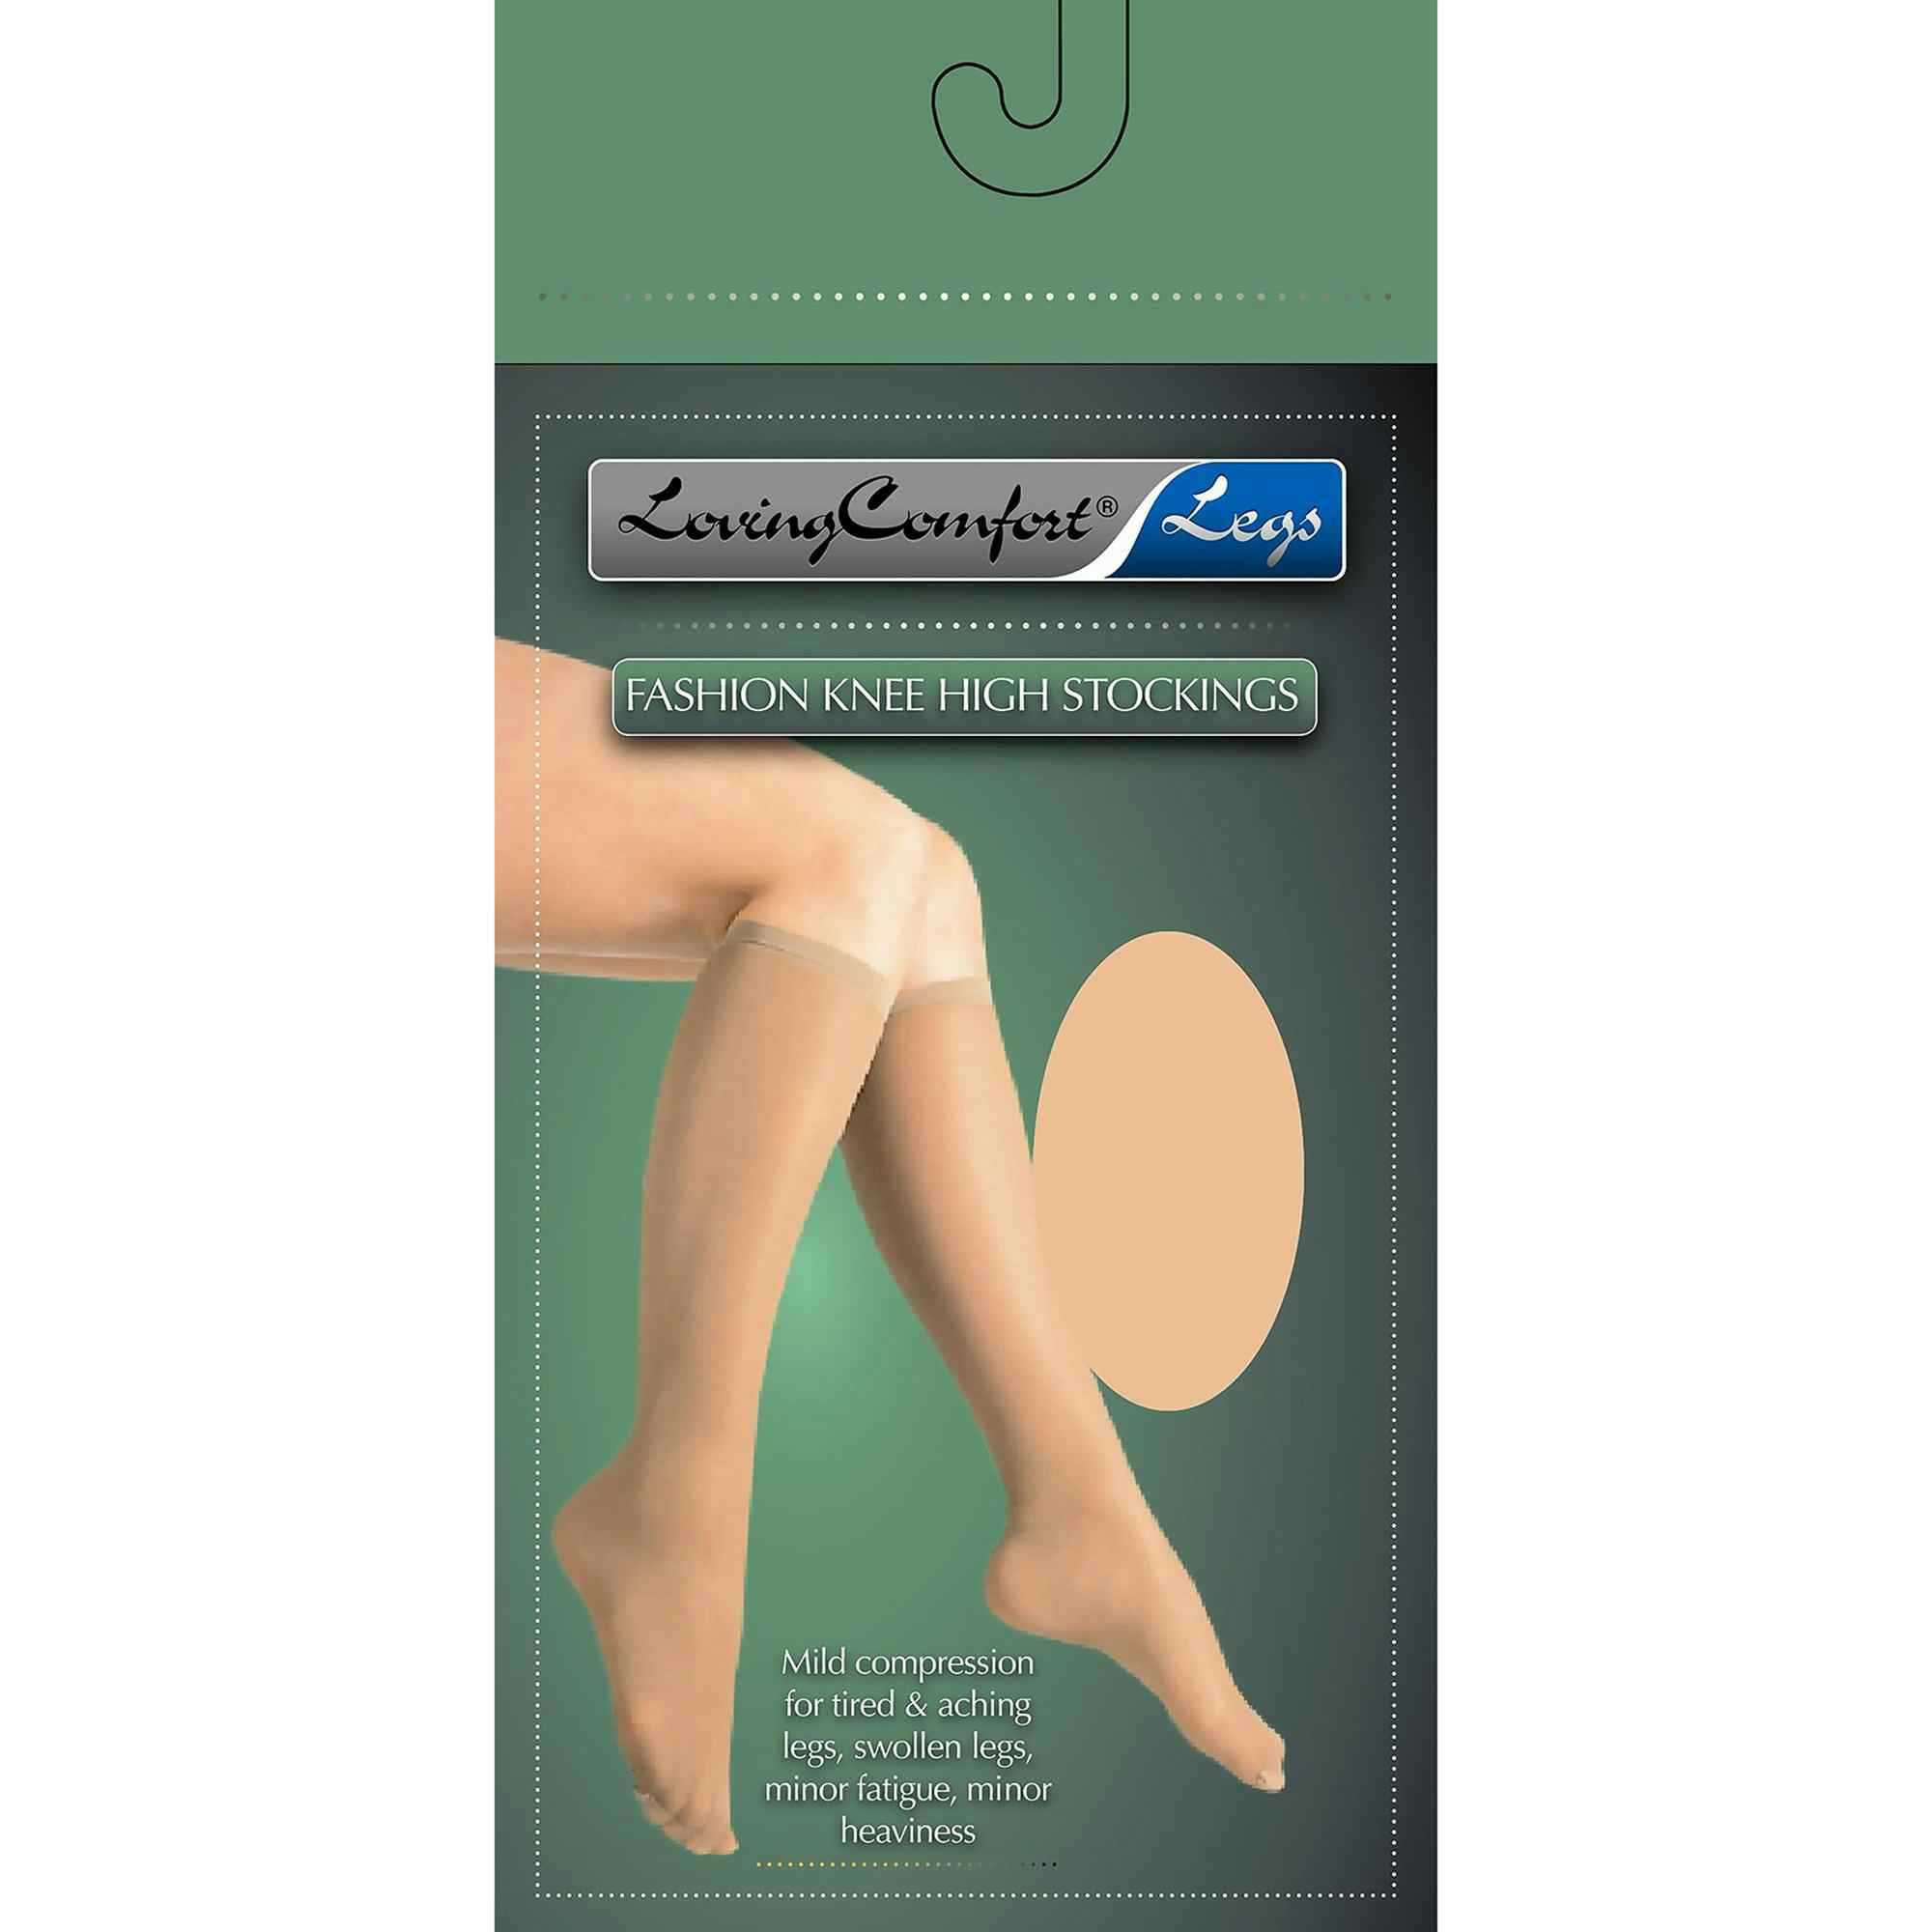 Loving Comfort Legs Fashion Knee High Stockings , 1648 BEI MD, Beige - Medium - 2 Pairs